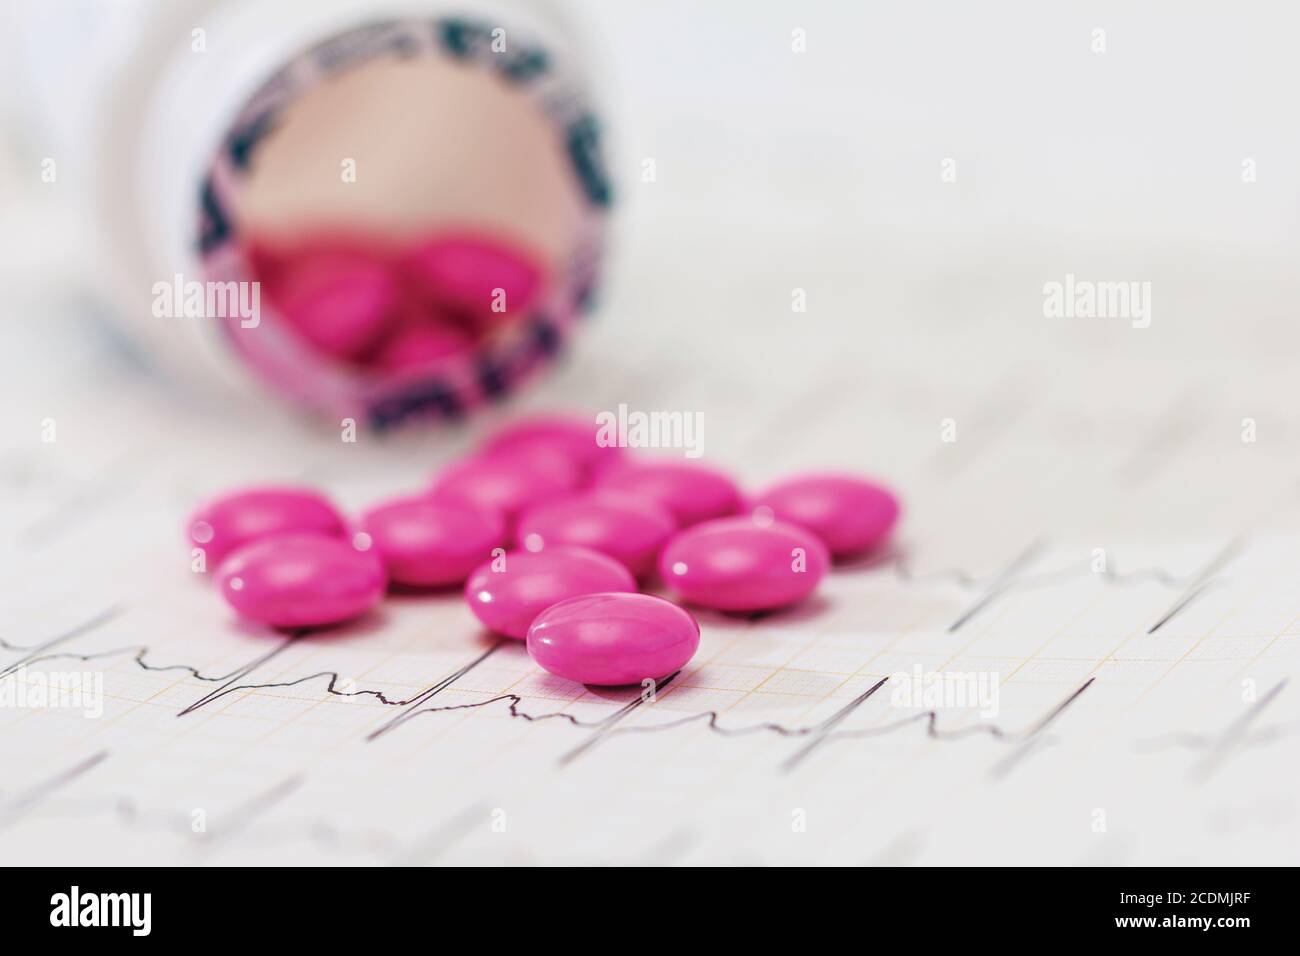 Prescription Medication Pain Pills and Drug Bottle on cardiogram Stock Photo